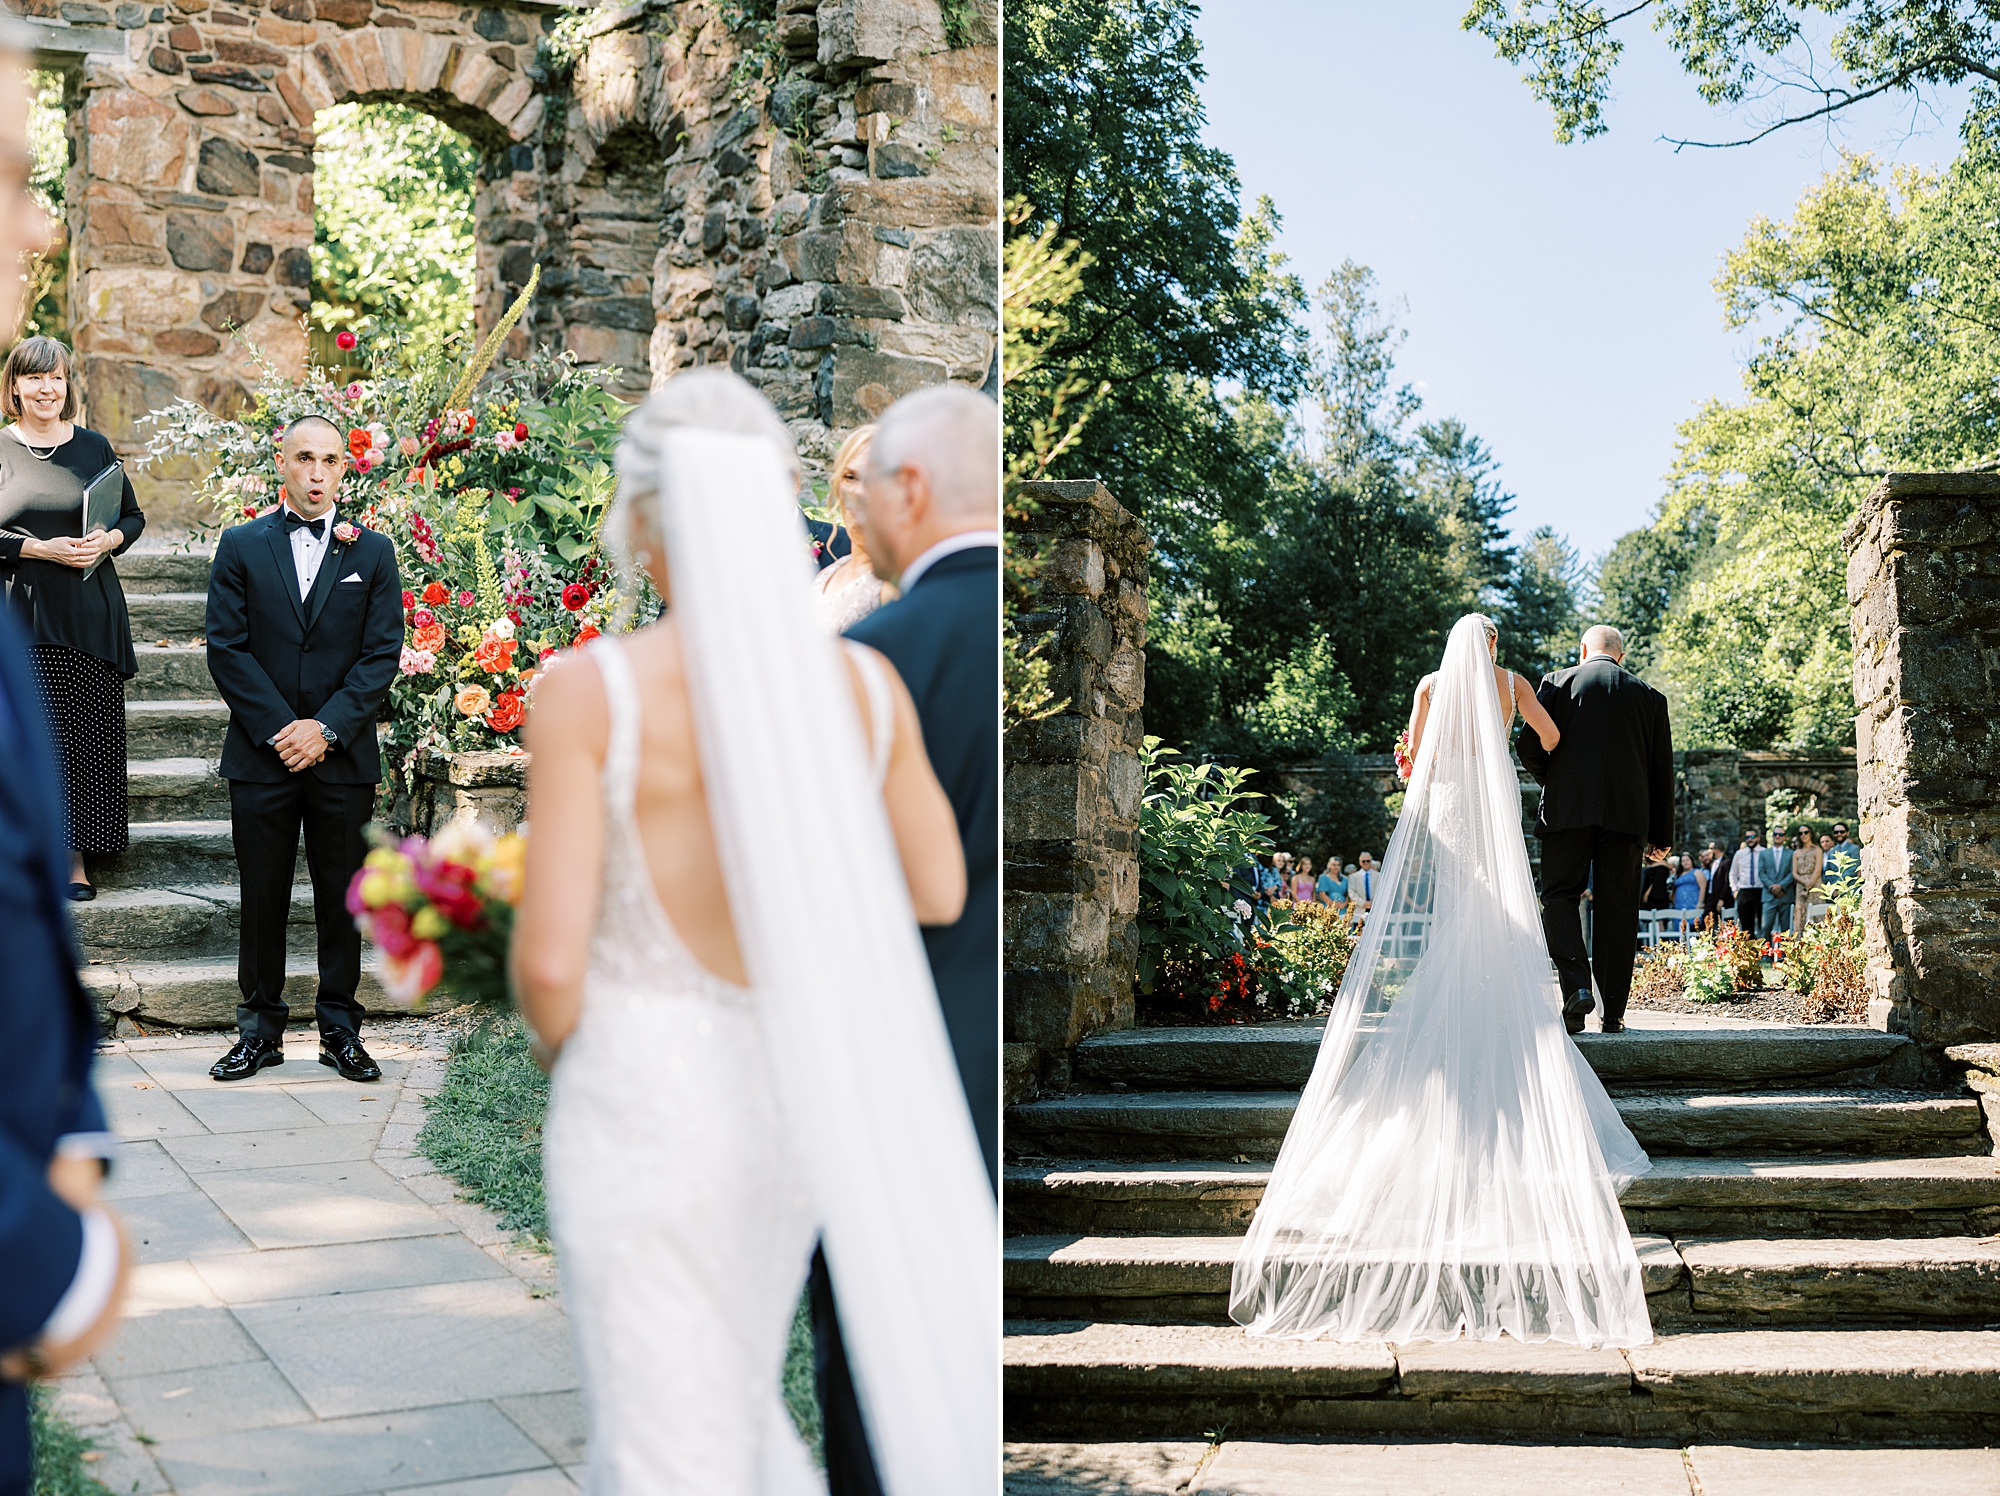 father walks bride into wedding ceremony in gardens at Parque Ridley Creek